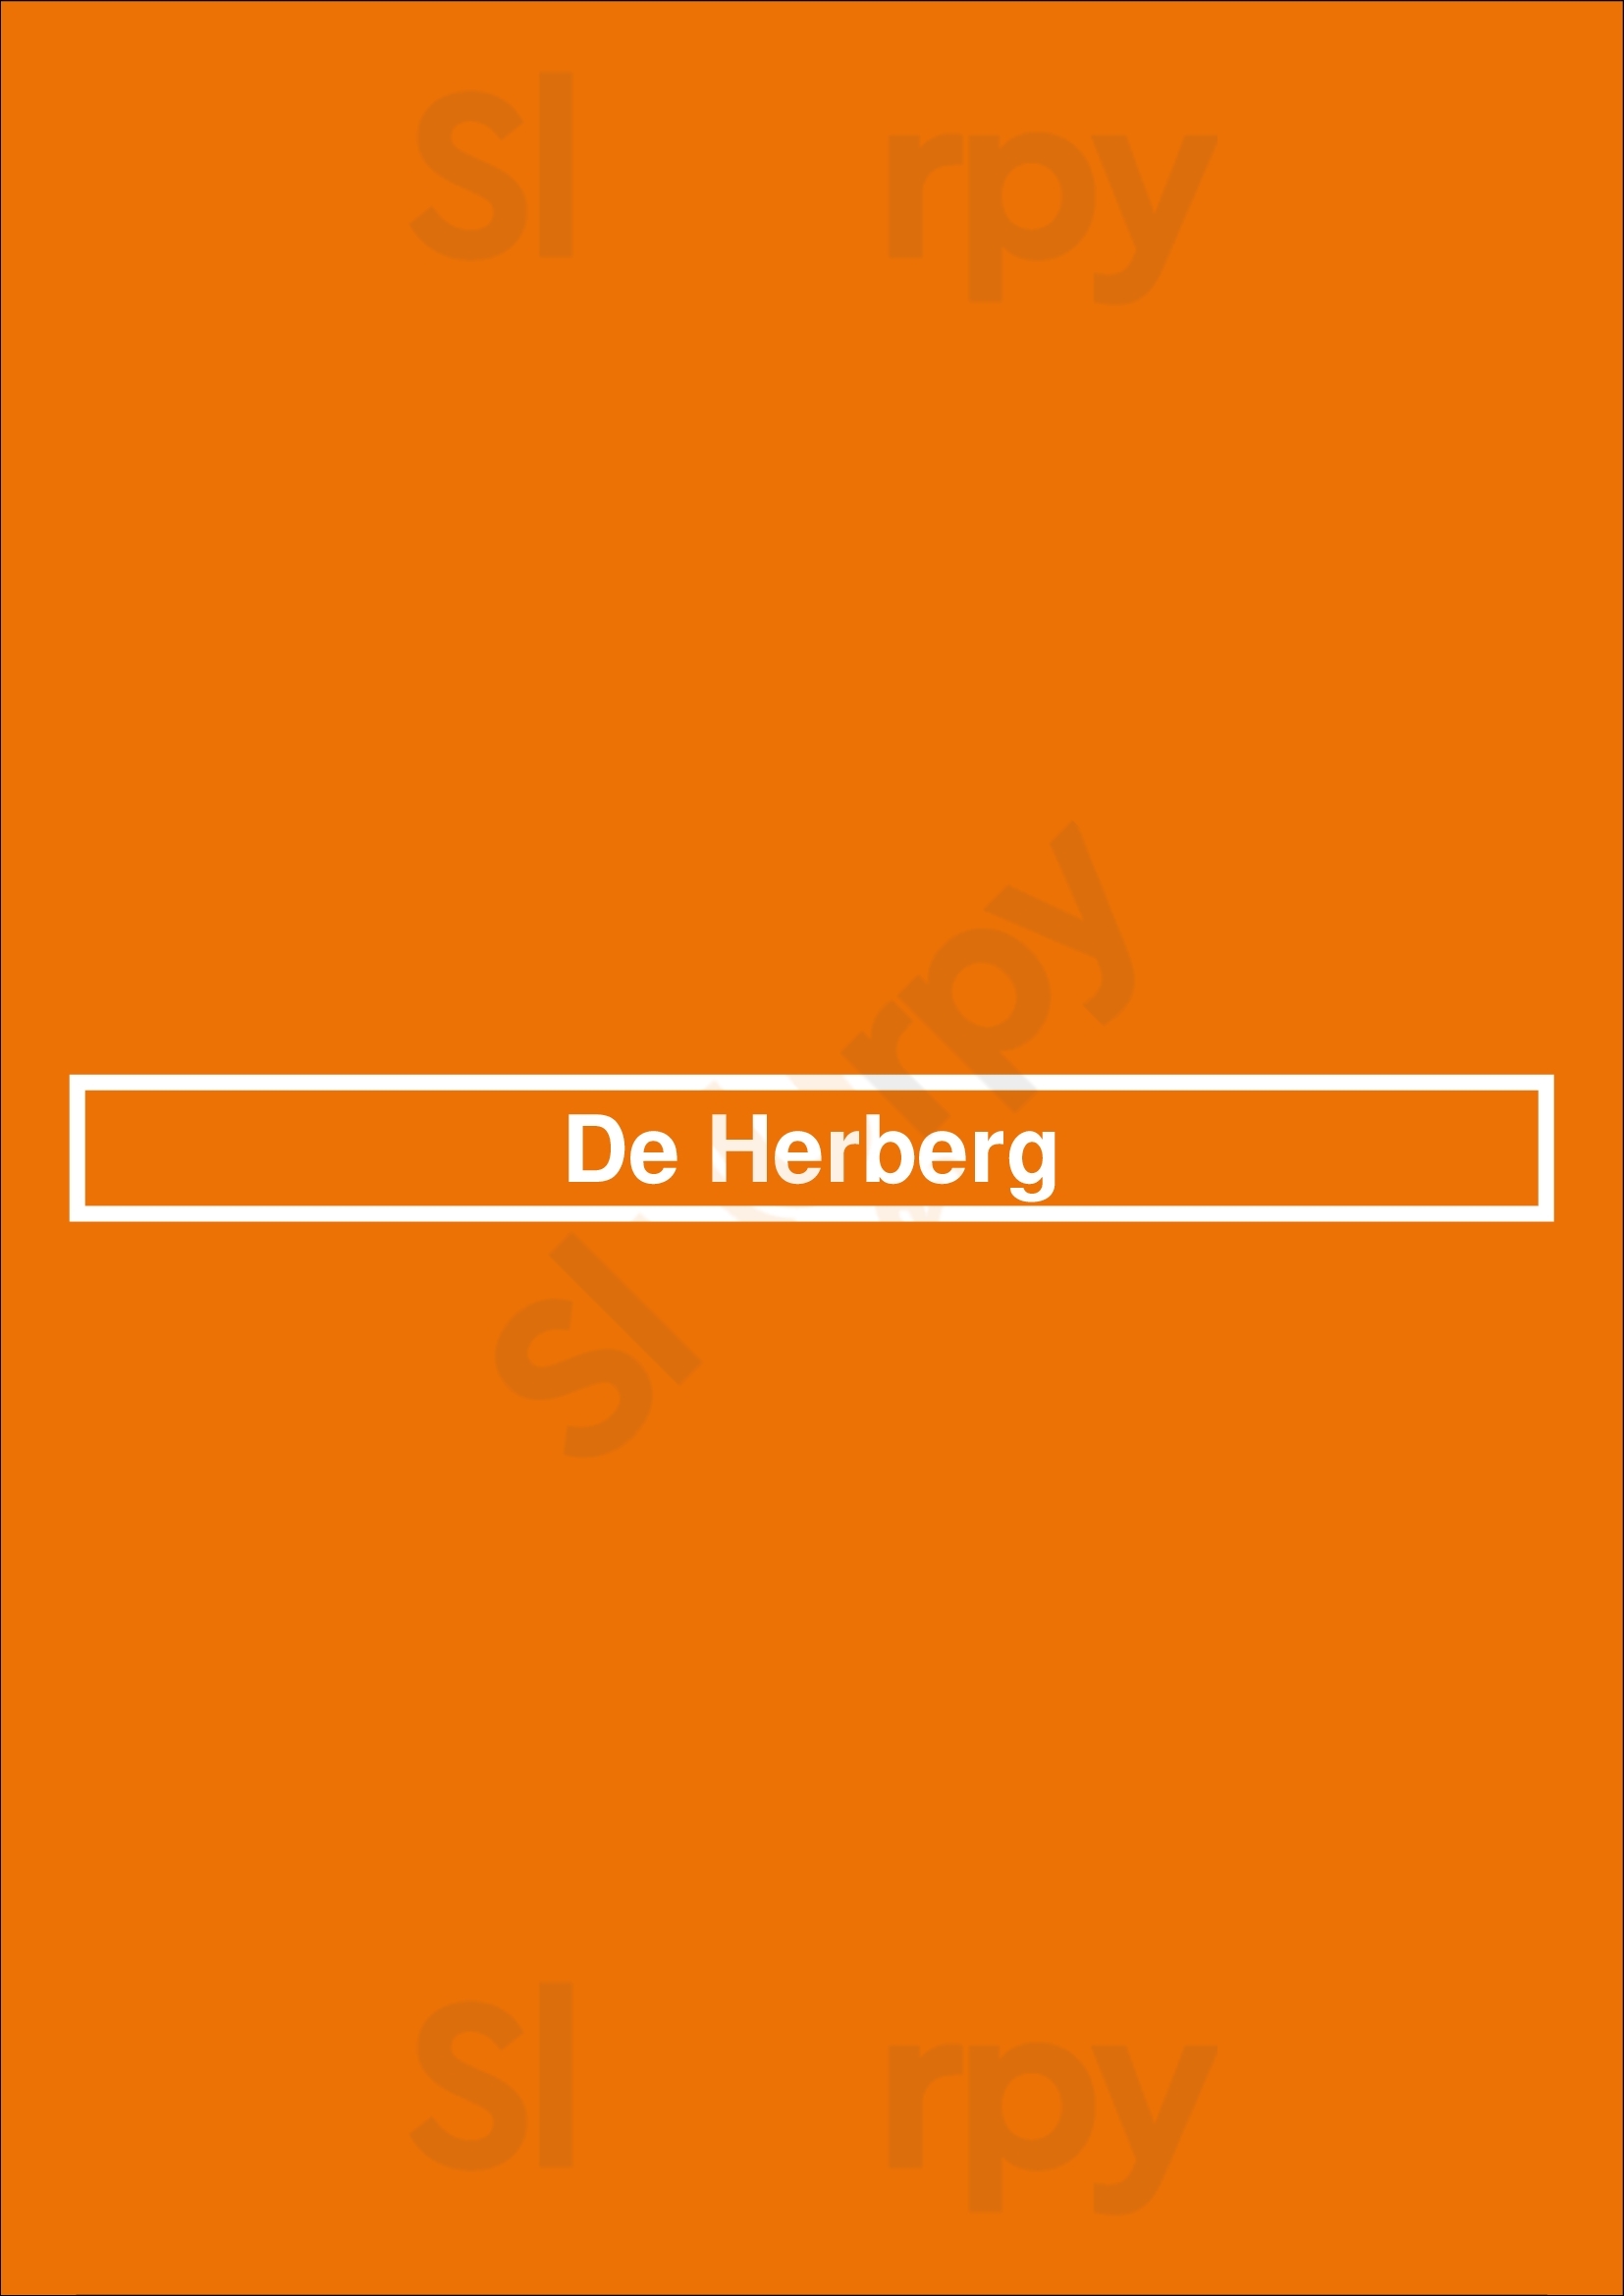 De Herberg Almere Menu - 1